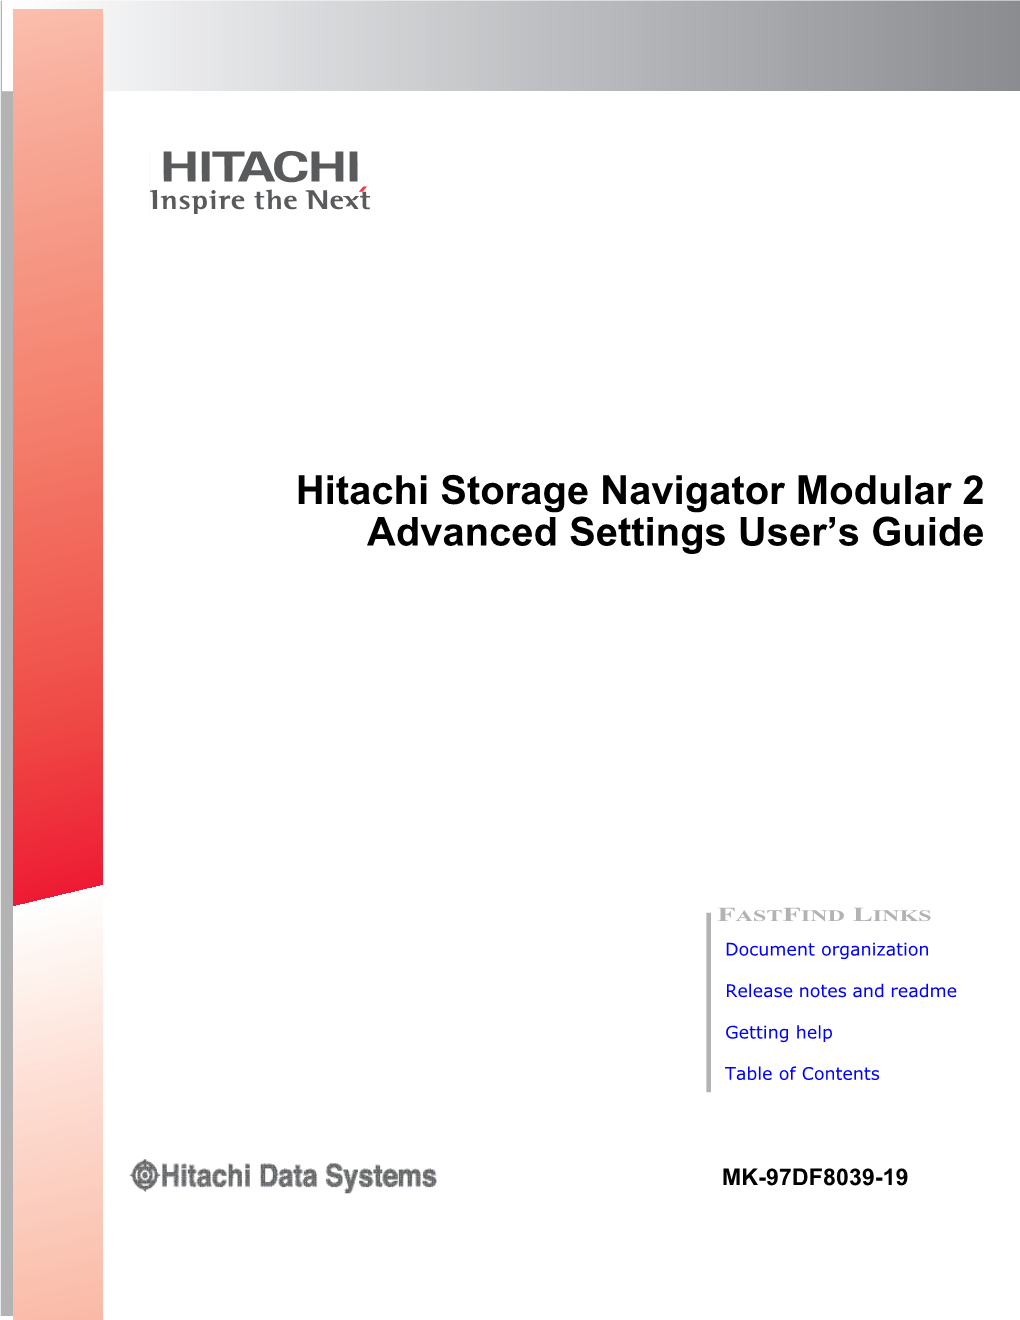 Hitachi Storage Navigator Modular 2 Advanced Settings User's Guide